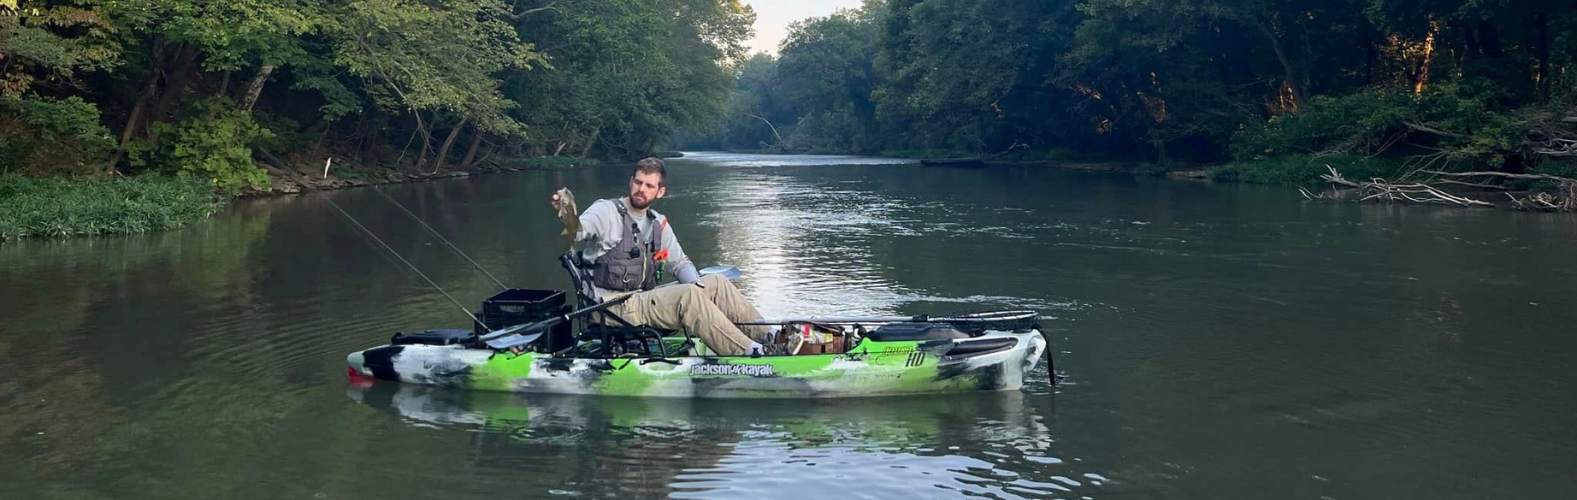 10 Tips for Kayak Fishing on a River with Garrett Reid